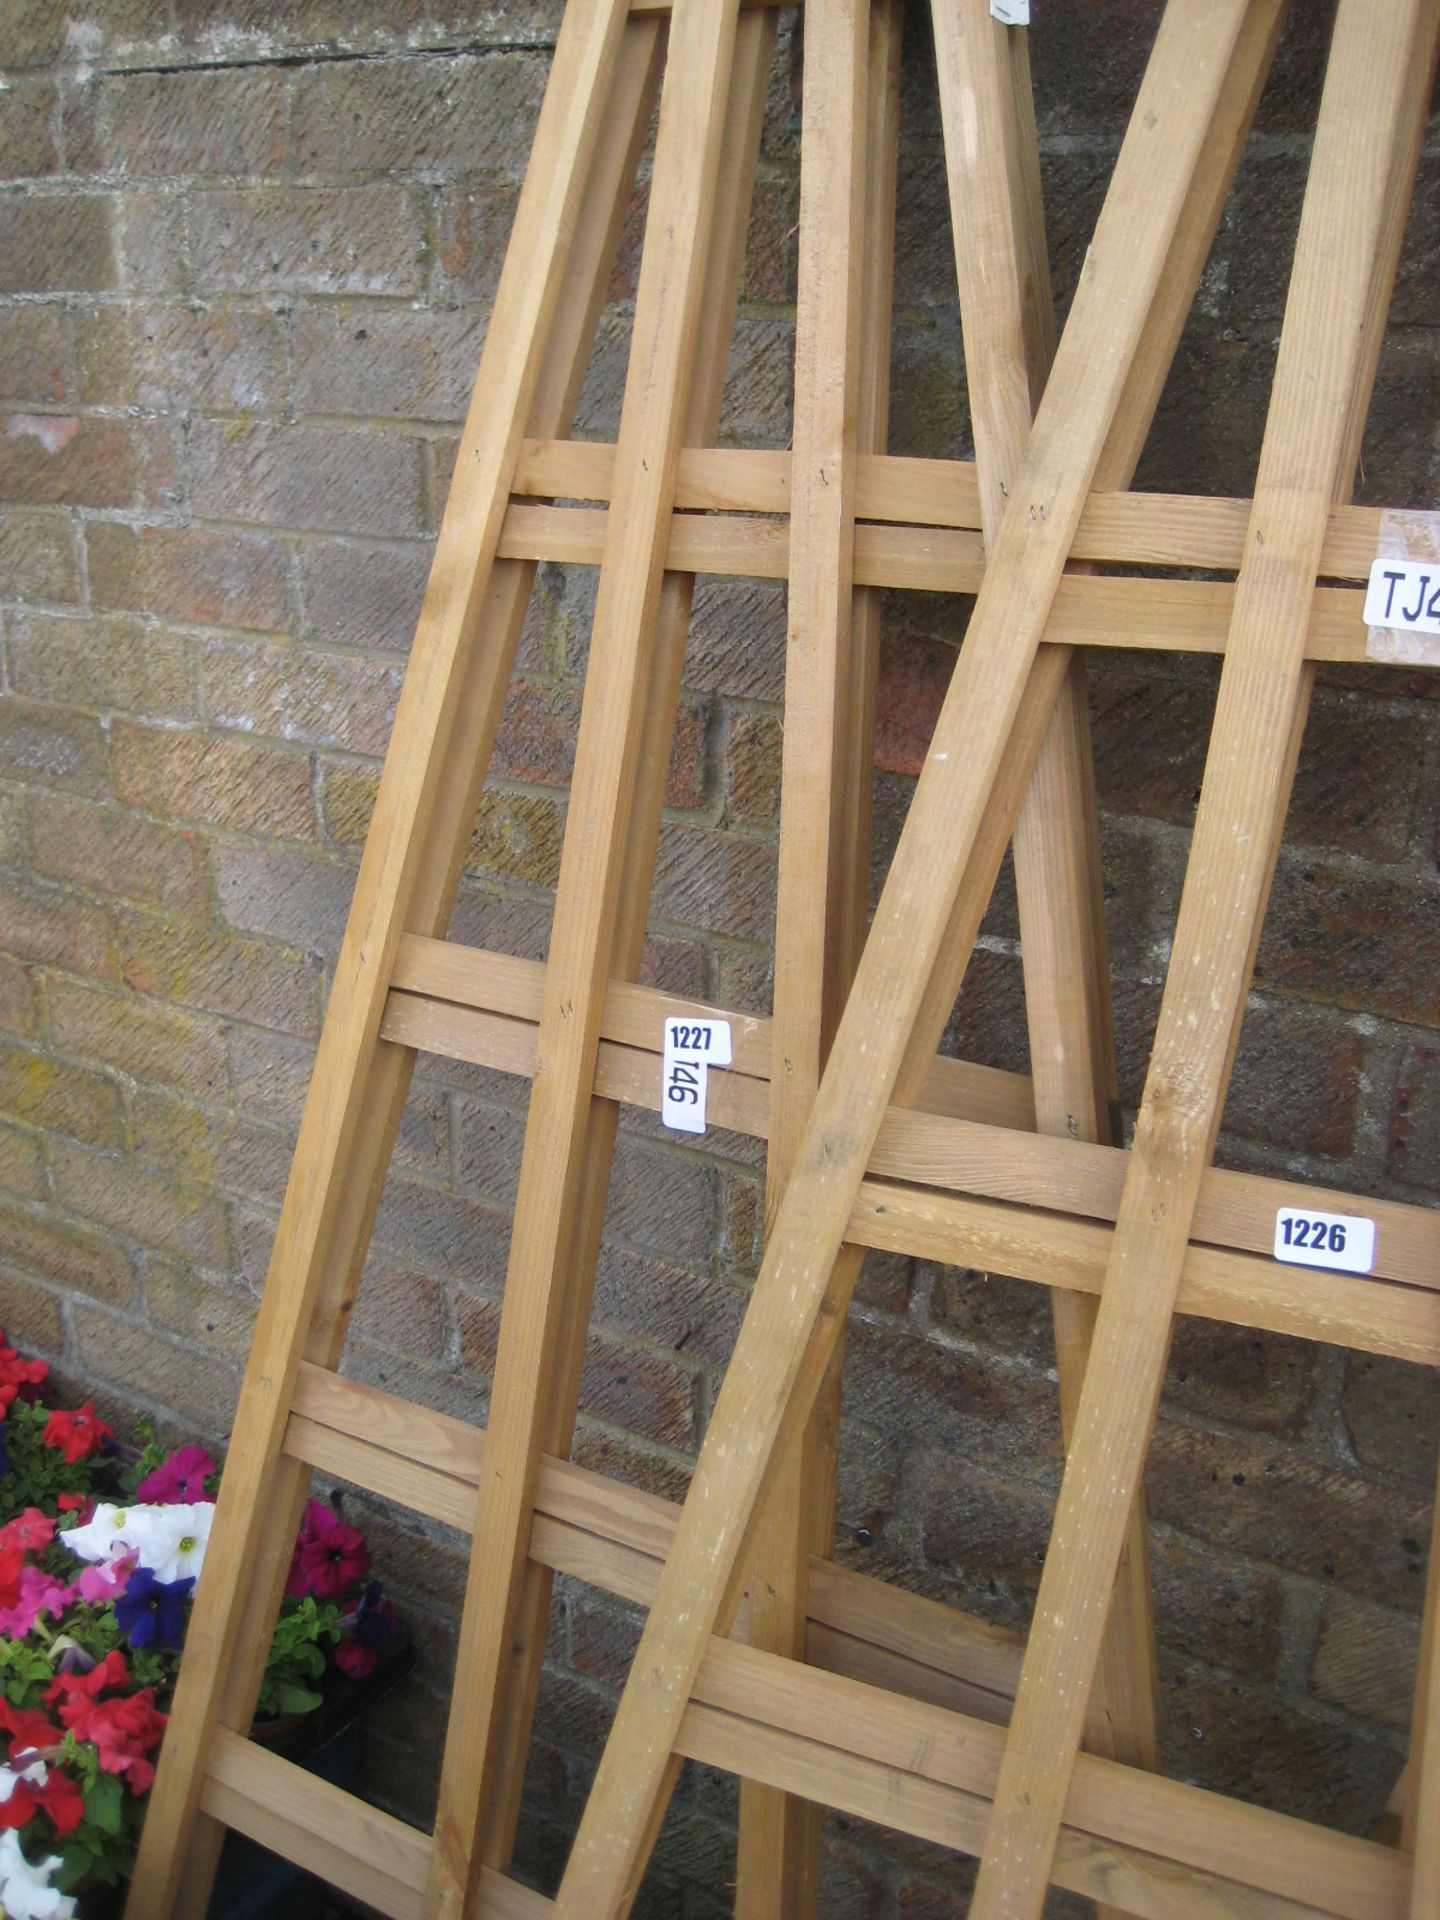 Pair of triangular garden trellis panels